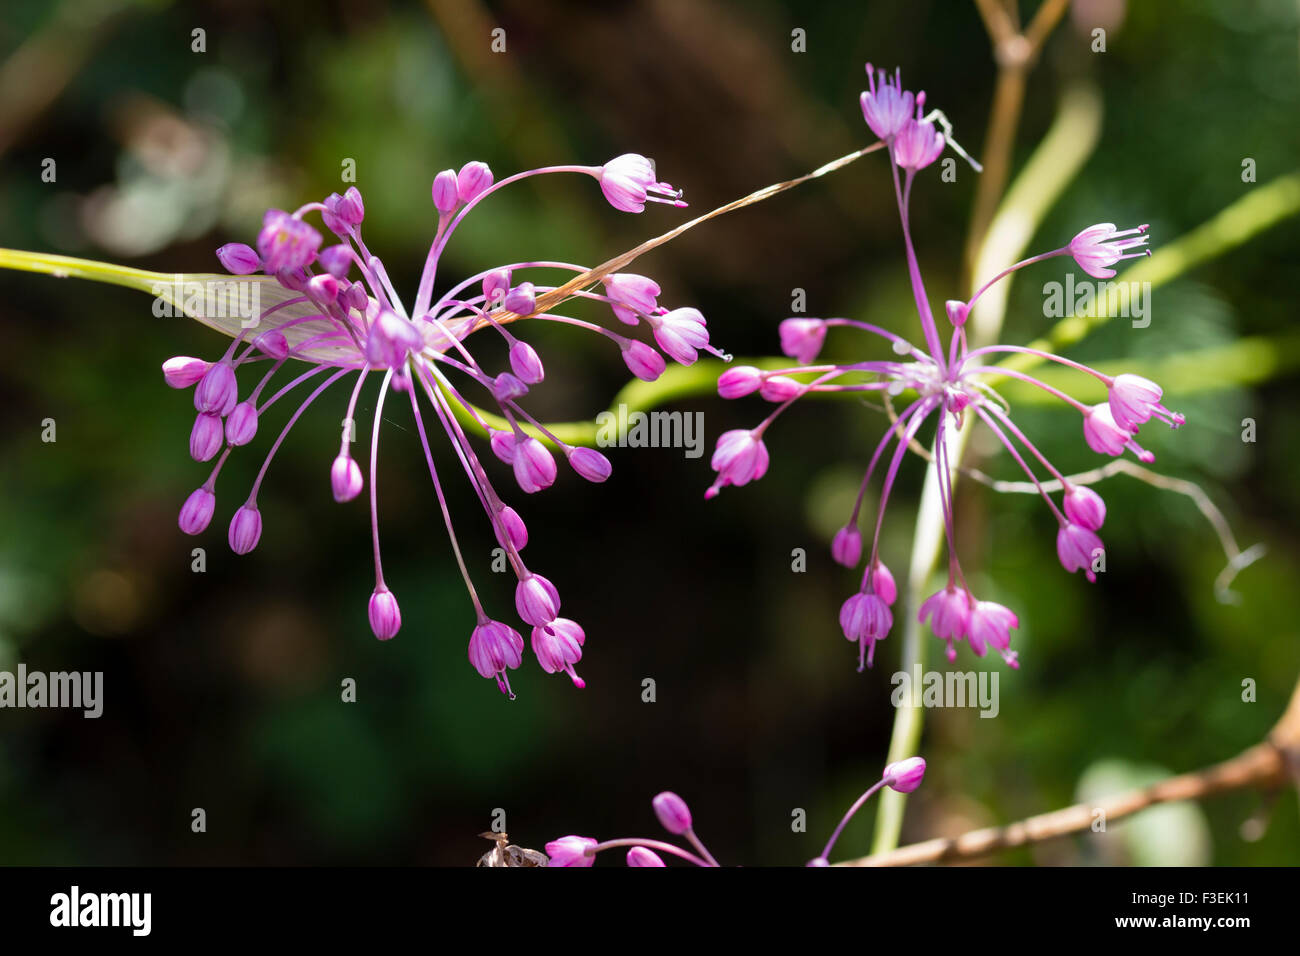 Spidery flower heads of the Autumn flowering ornamental onion, Allium carinatum ssp. pulchellum Stock Photo